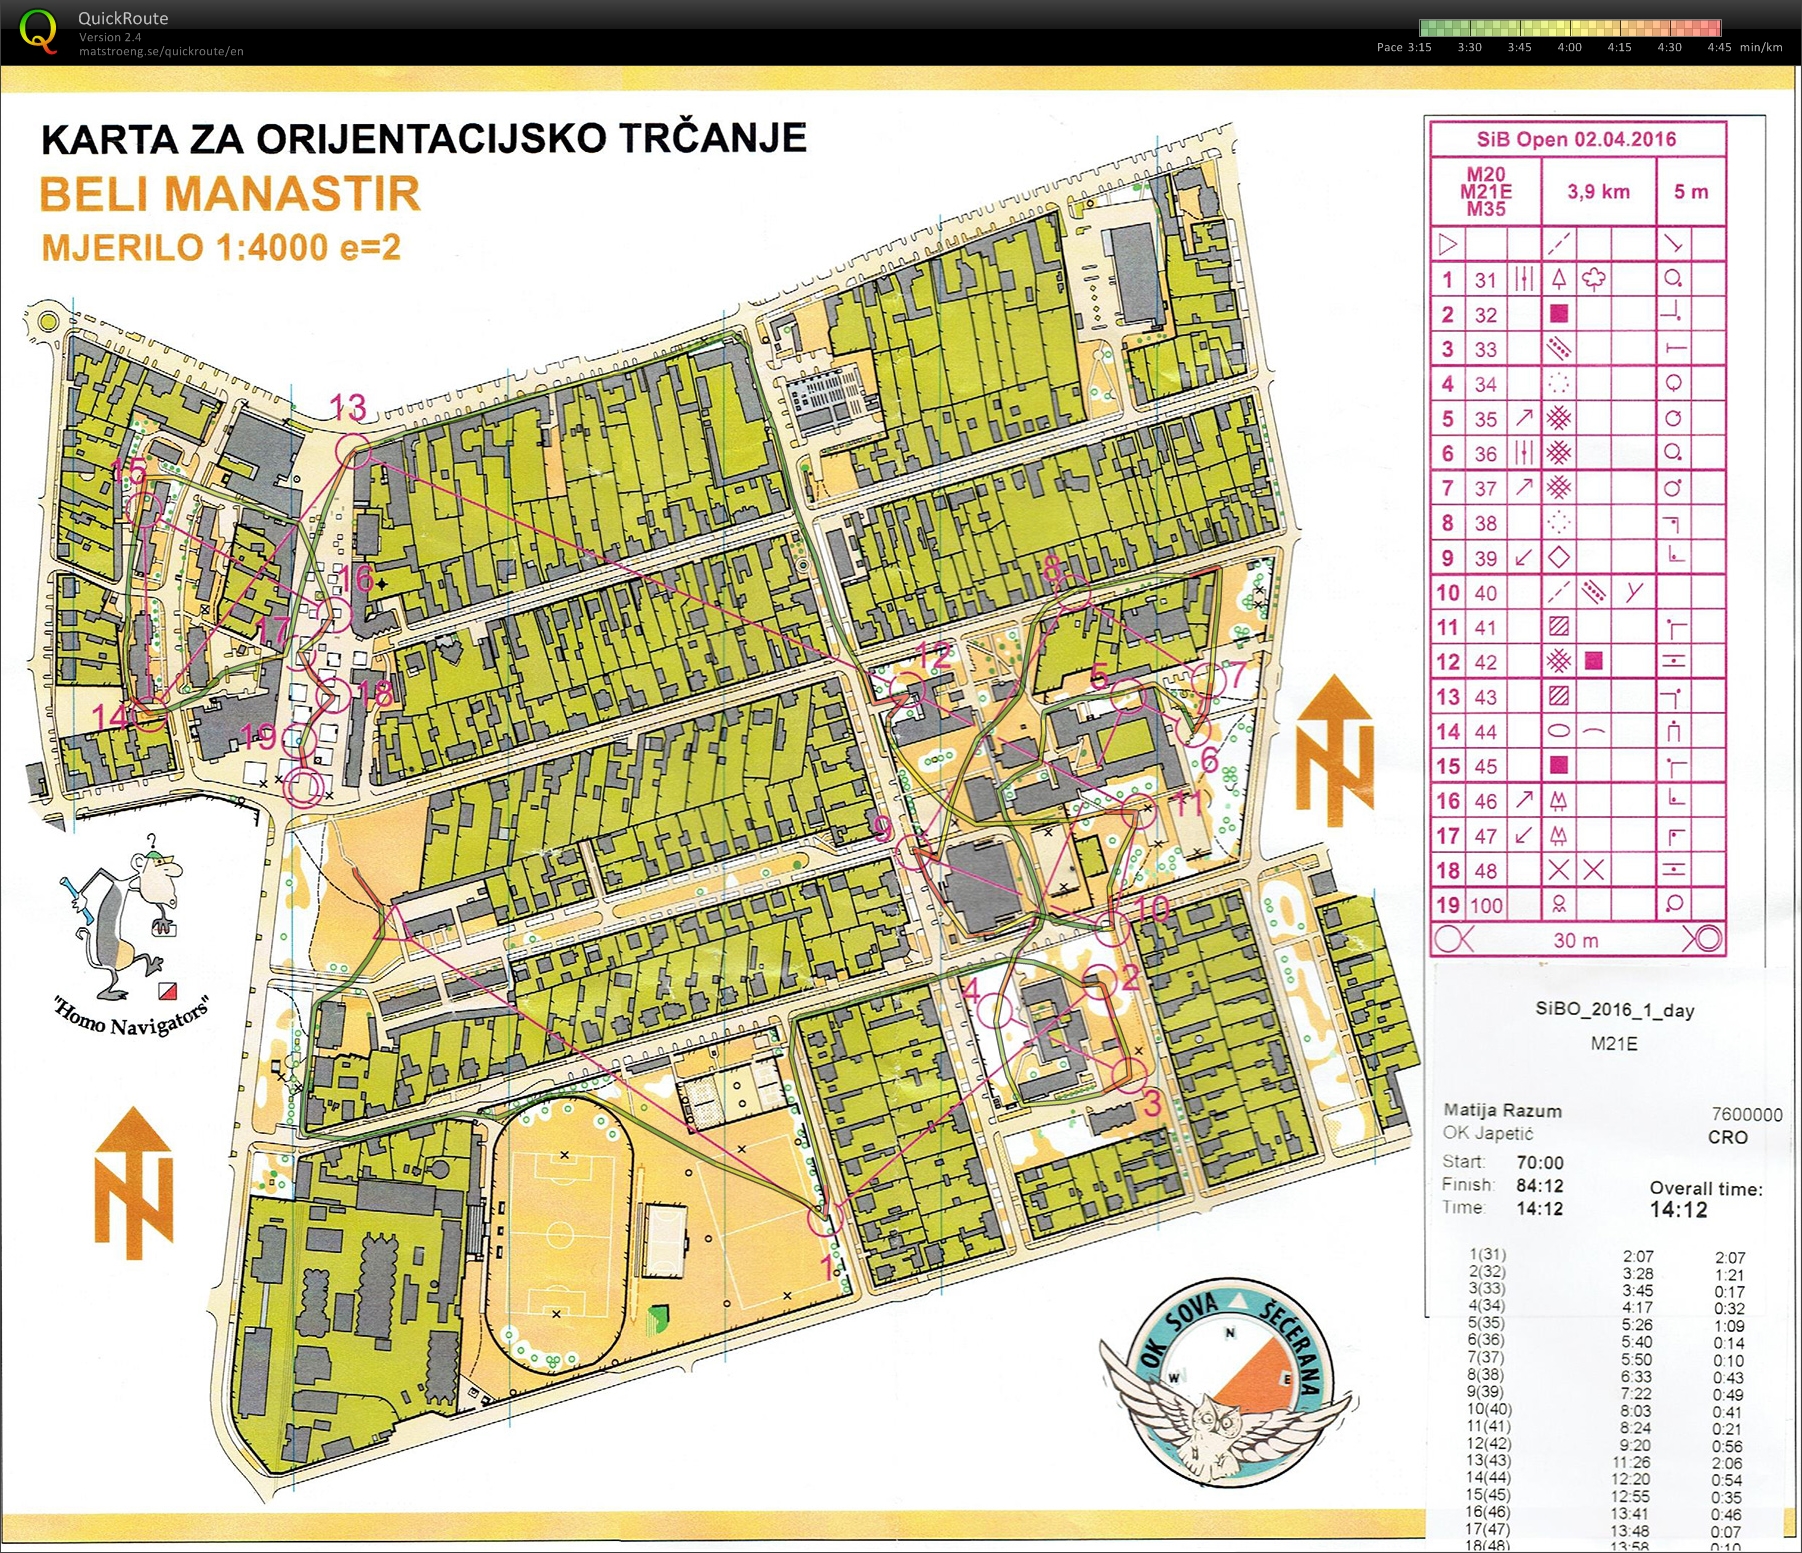 Slavonija & Baranja open - E1, WRE sprint (2016-04-02)